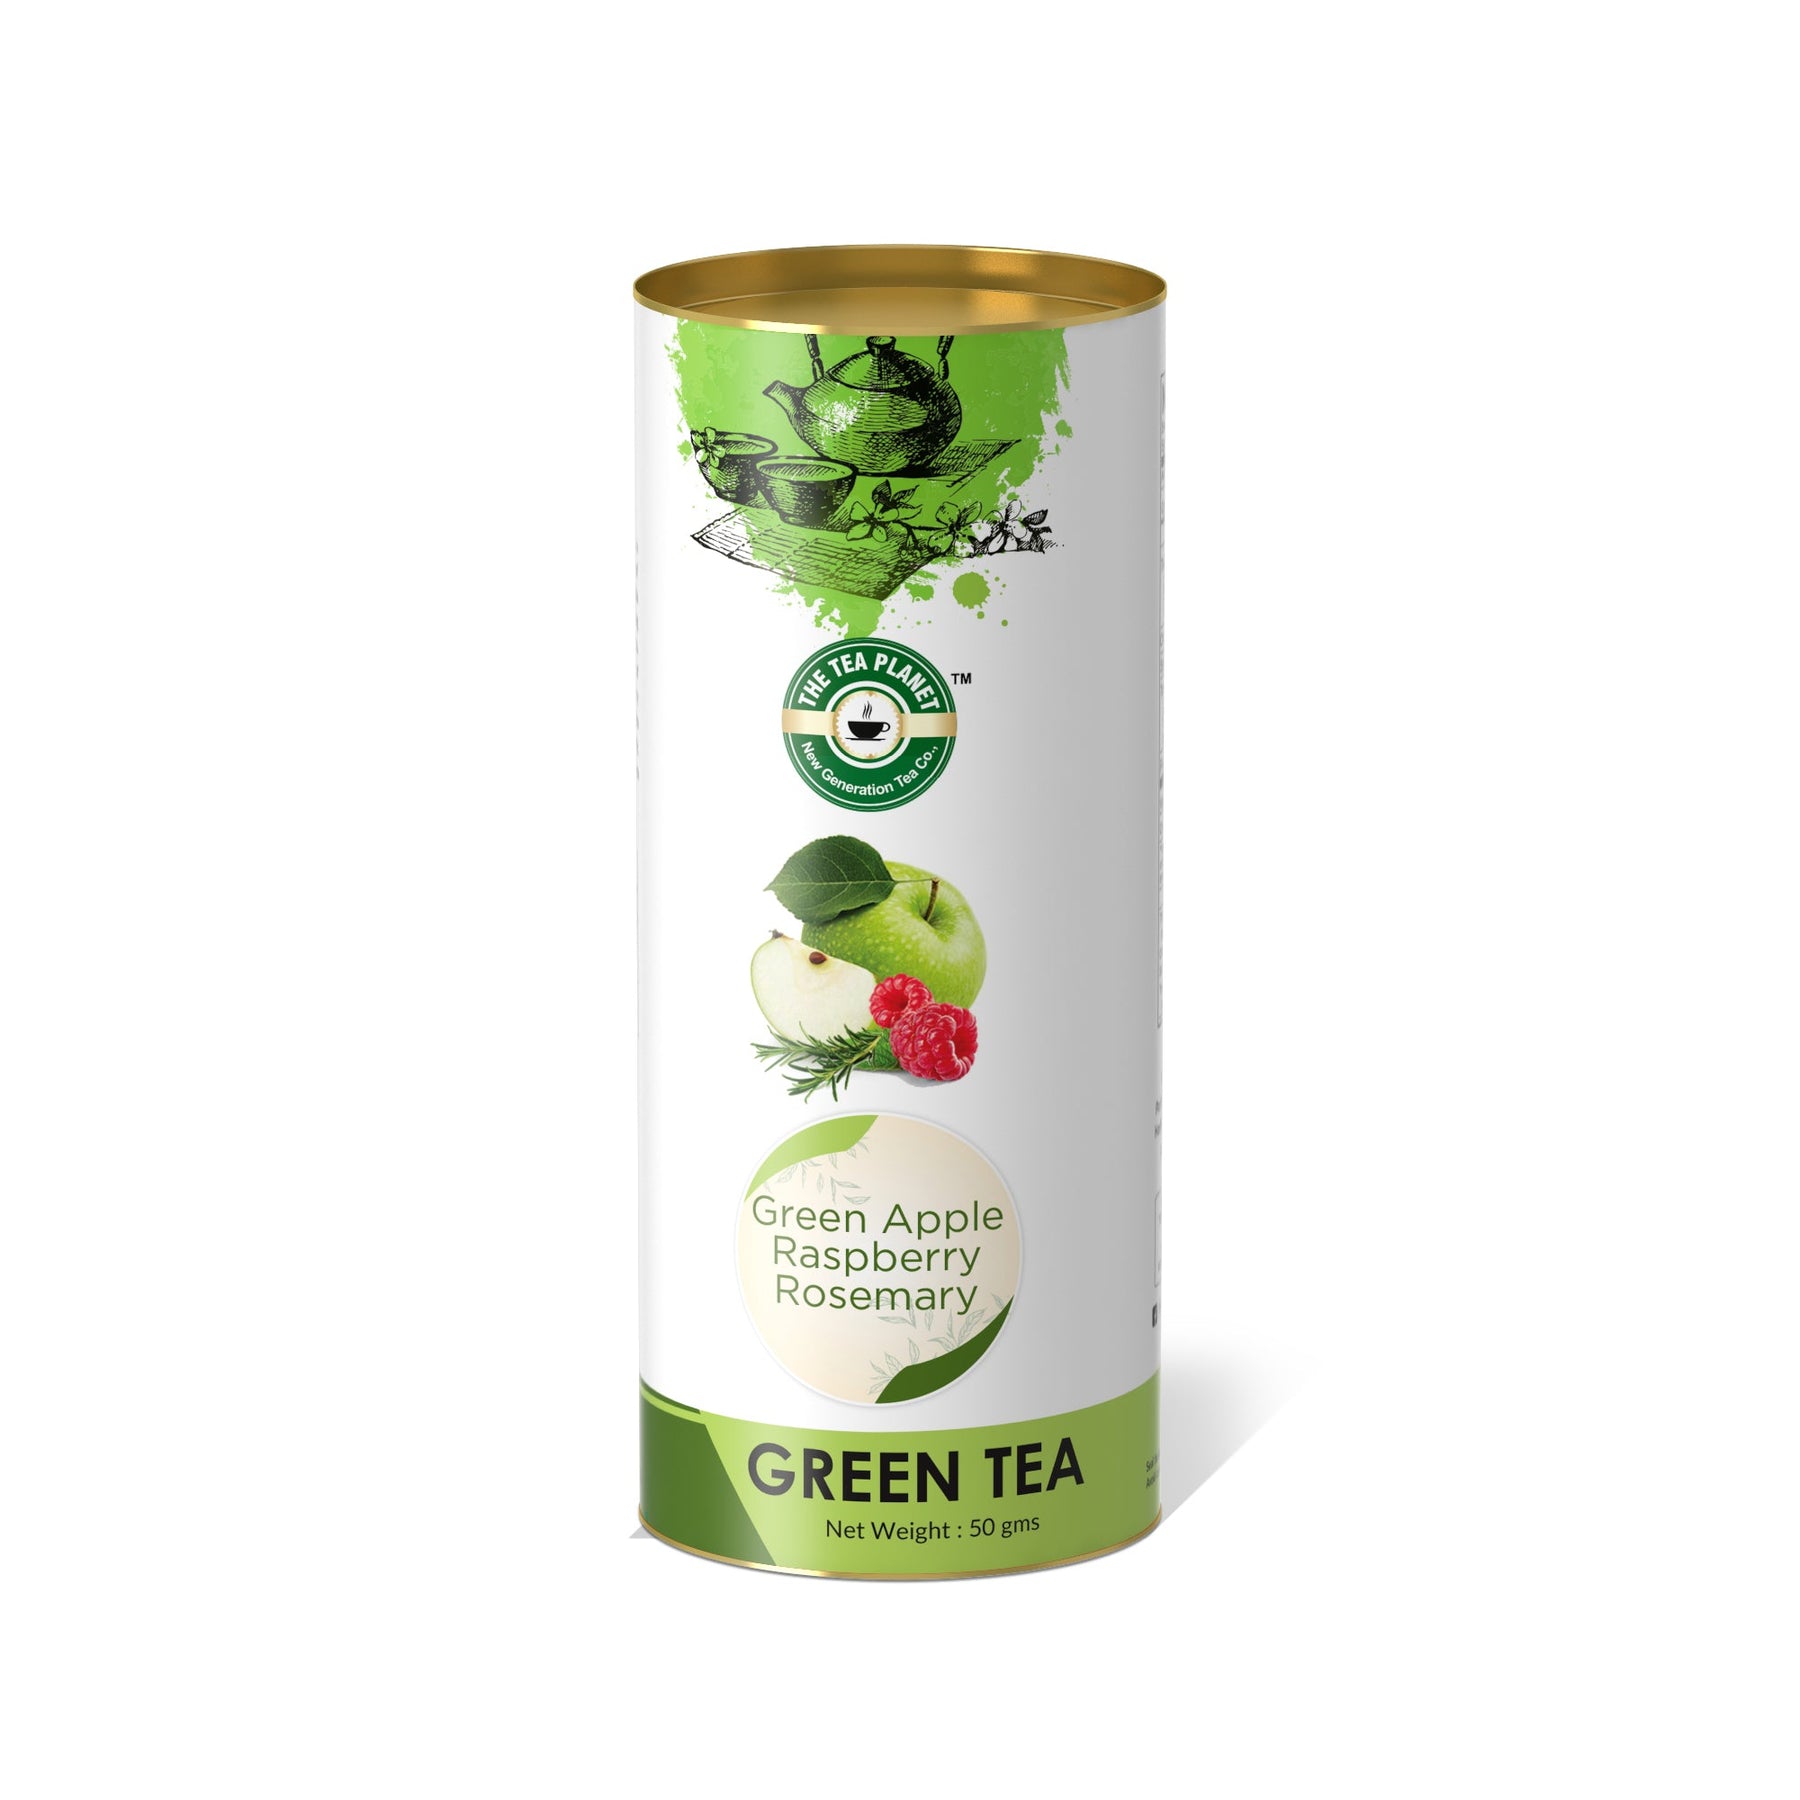 Green Apple, Raspberry Rosemary Orthodox Tea - 50 gms